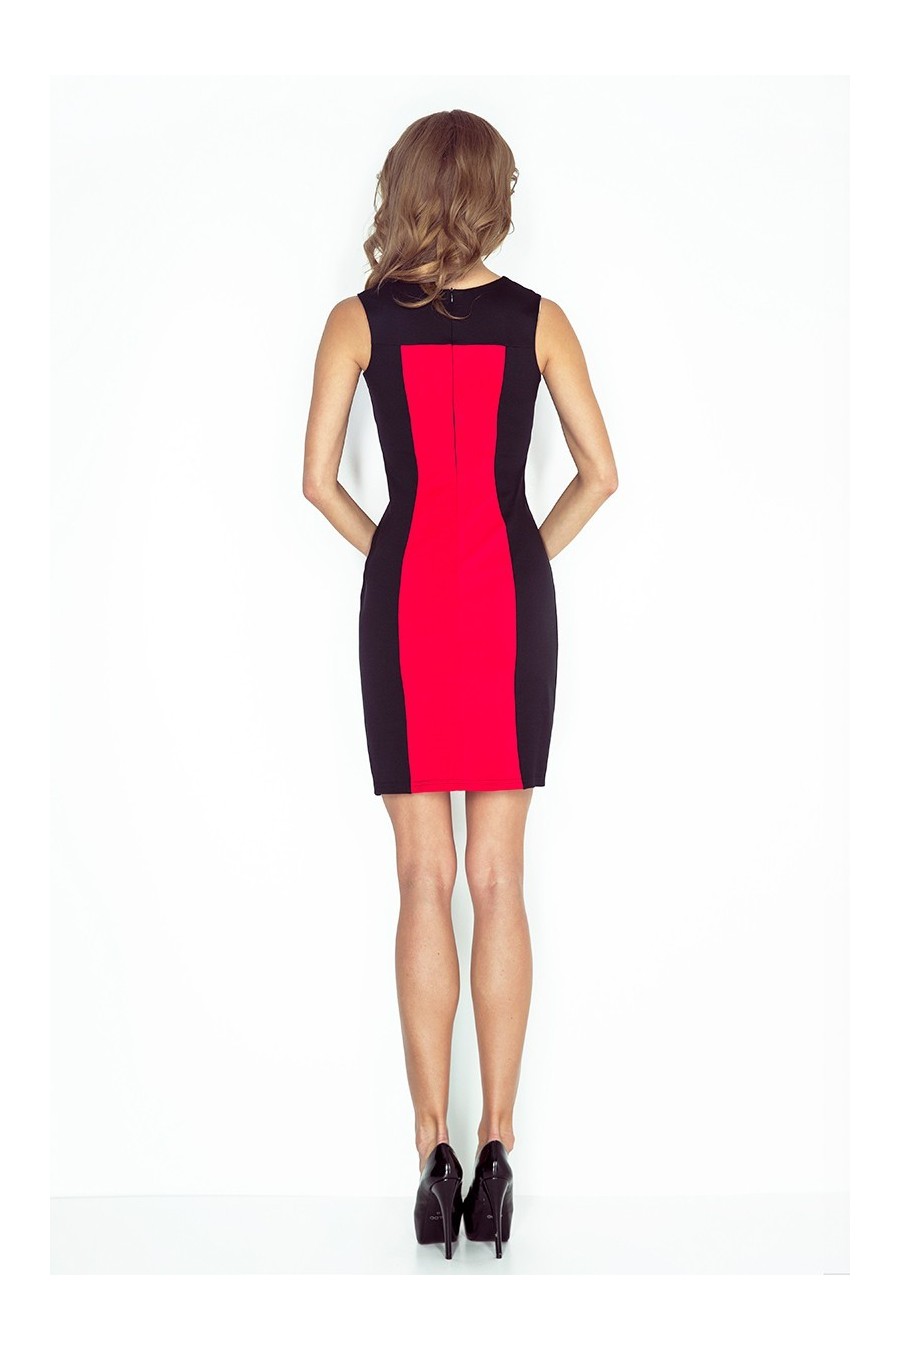 Dvoubarevné šaty - černá + cervená MM 006-1